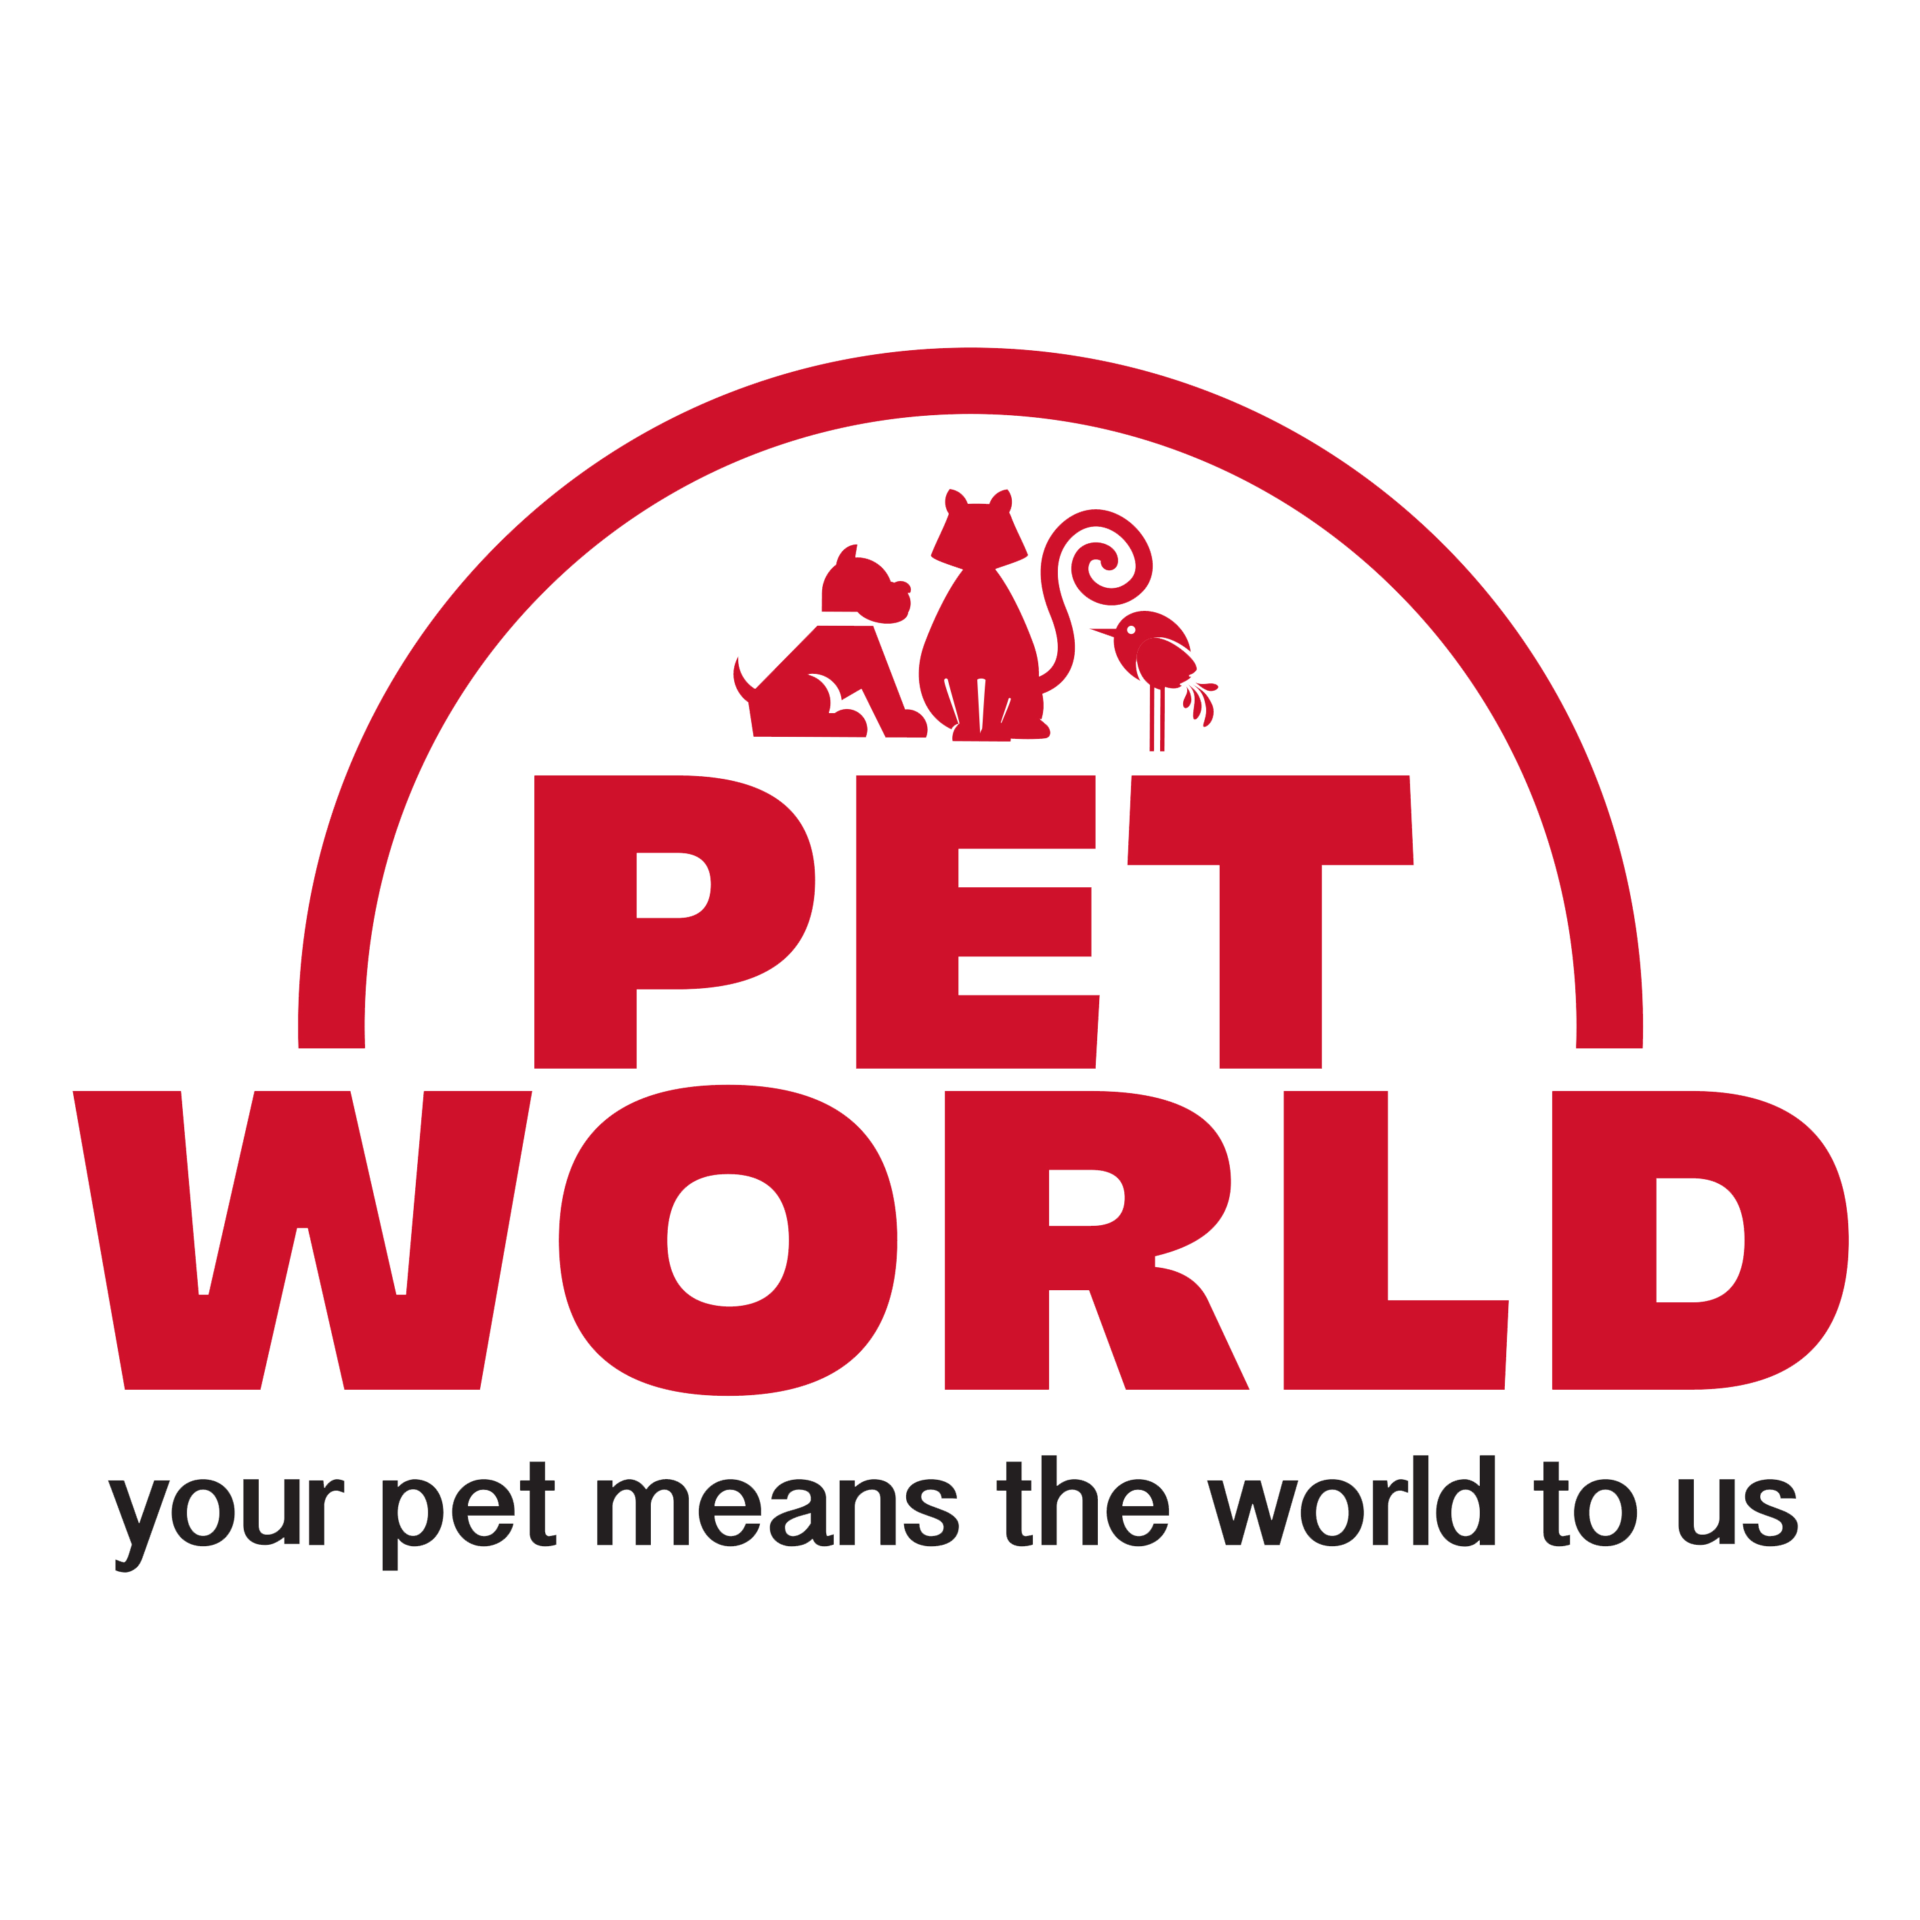 Pet World. World of Pets logo. PETWORLD logo. Pet meaning.